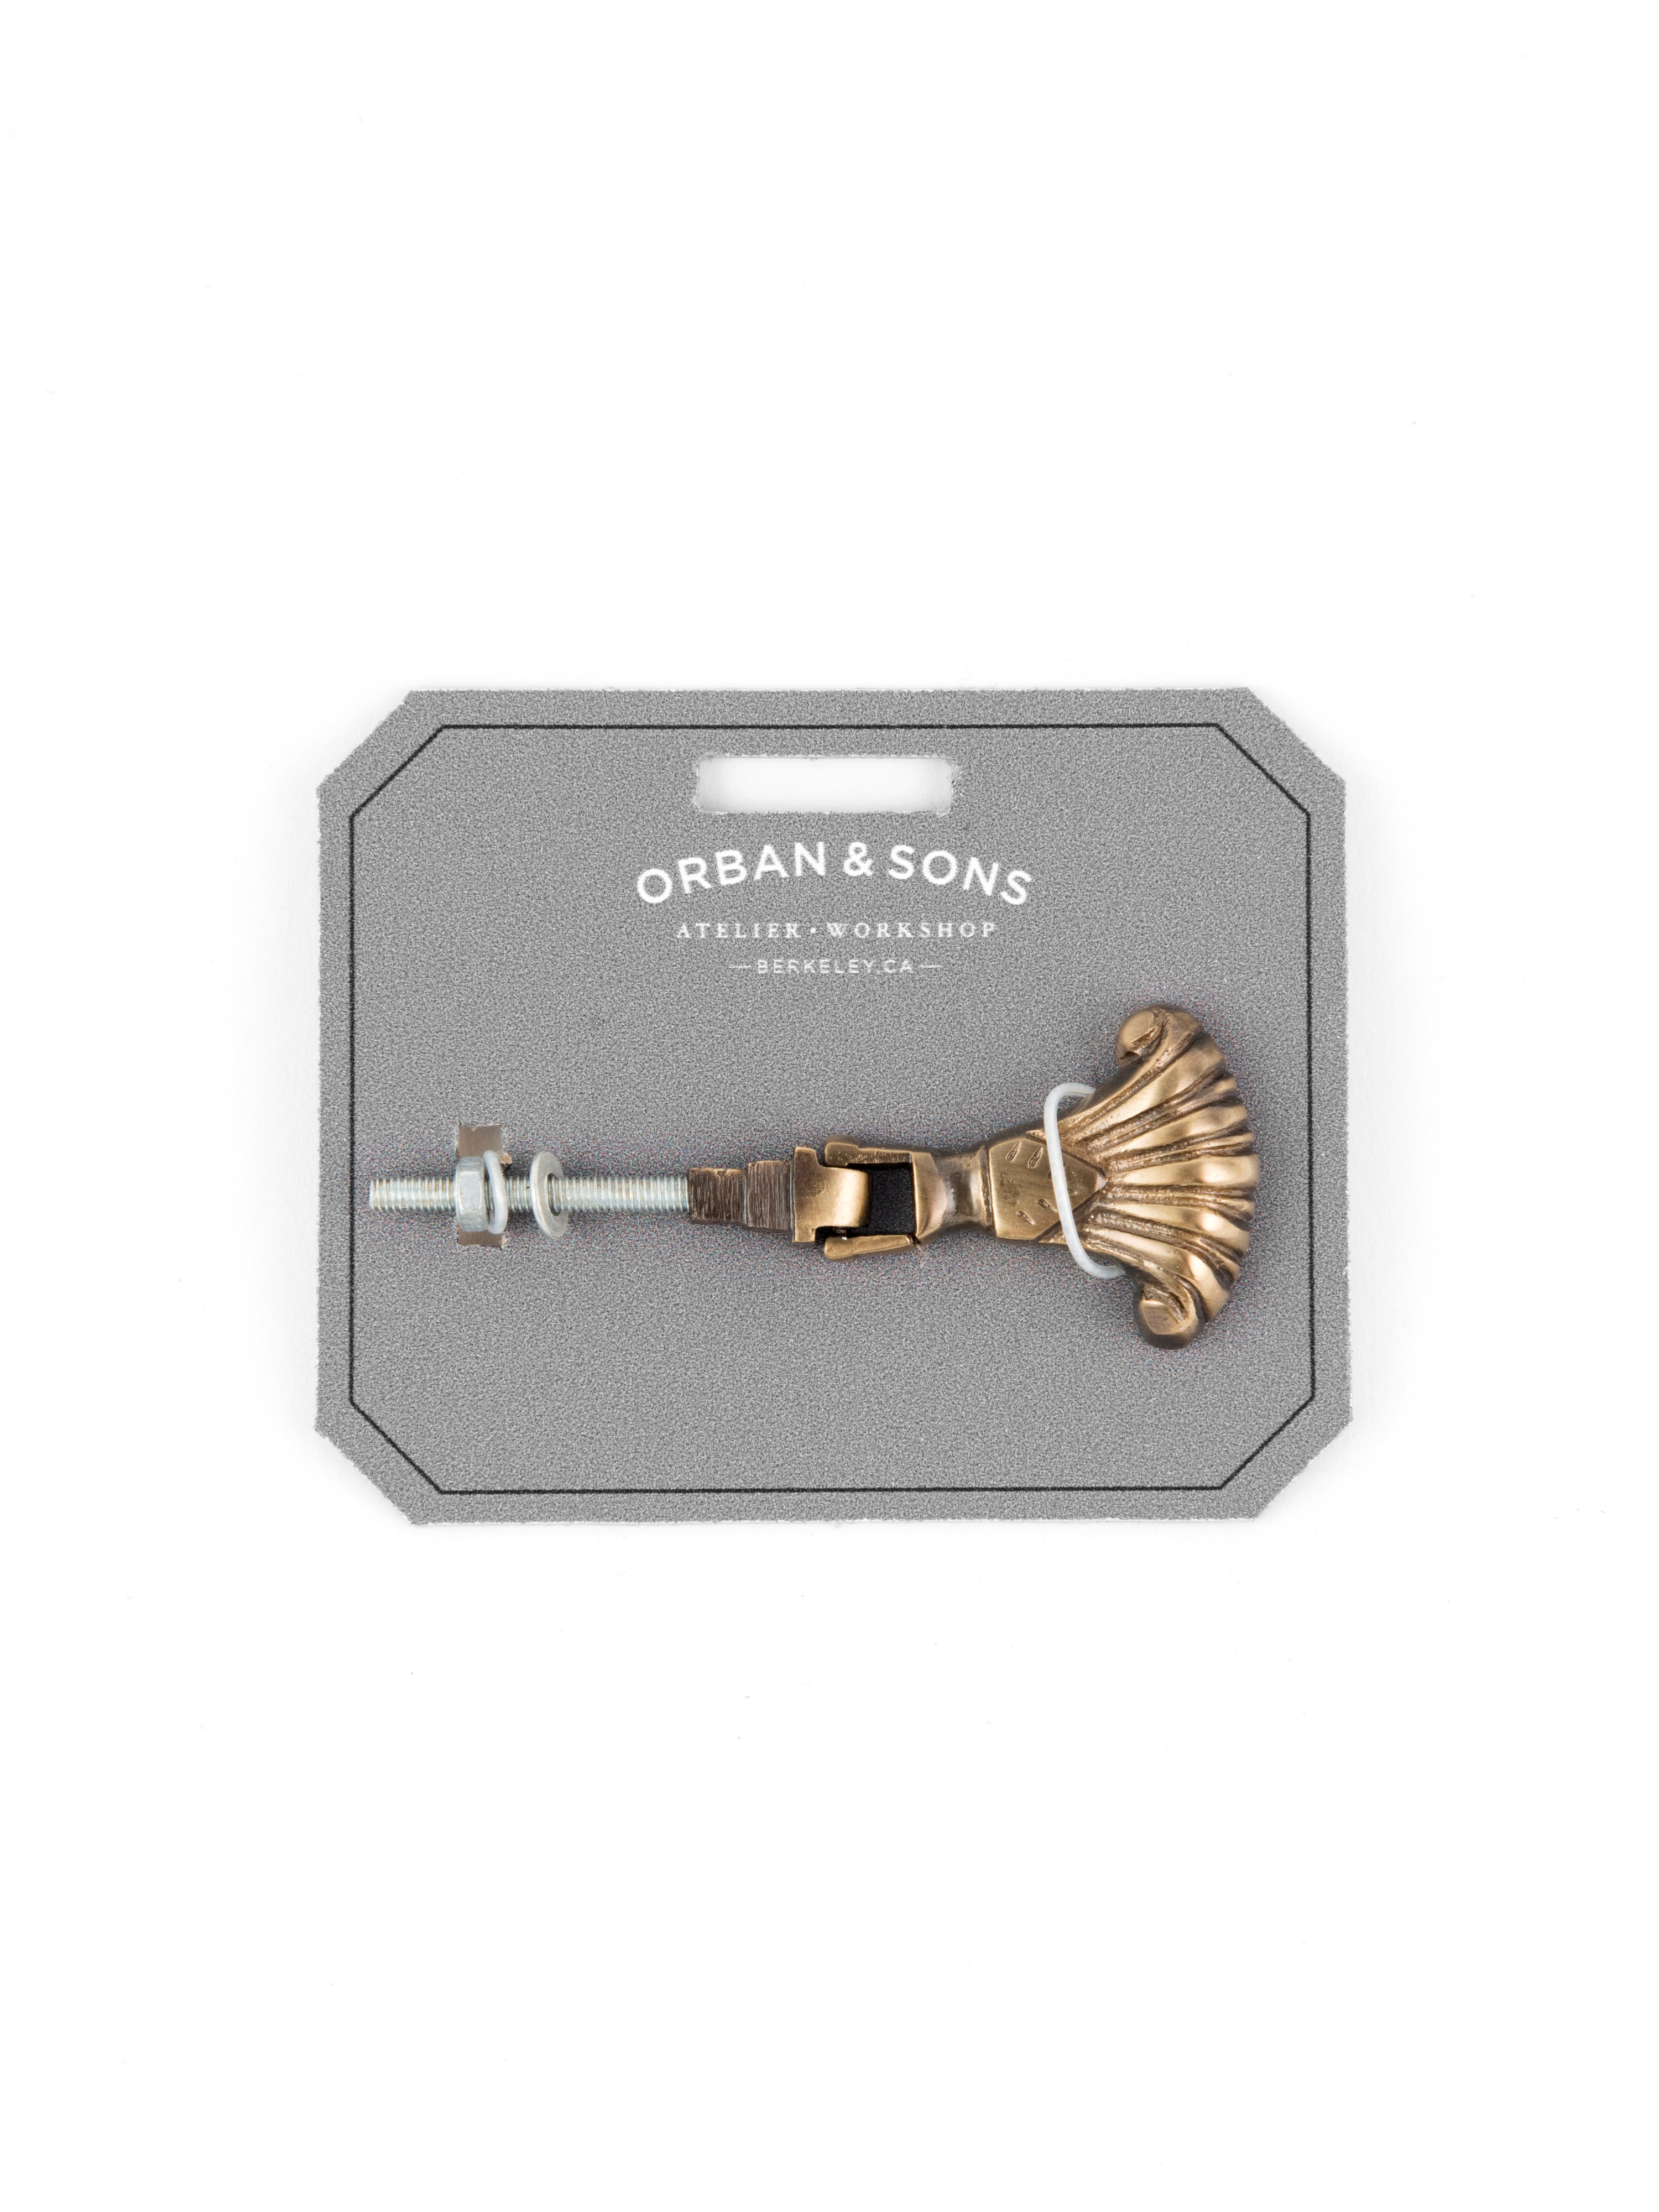 Orban & Sons Brass Puller #1 - Orban & Sons - Brand_Orban & Sons - Corkscrews & Tools - Orban & Sons - DSC0536_JasonLeCras_LG